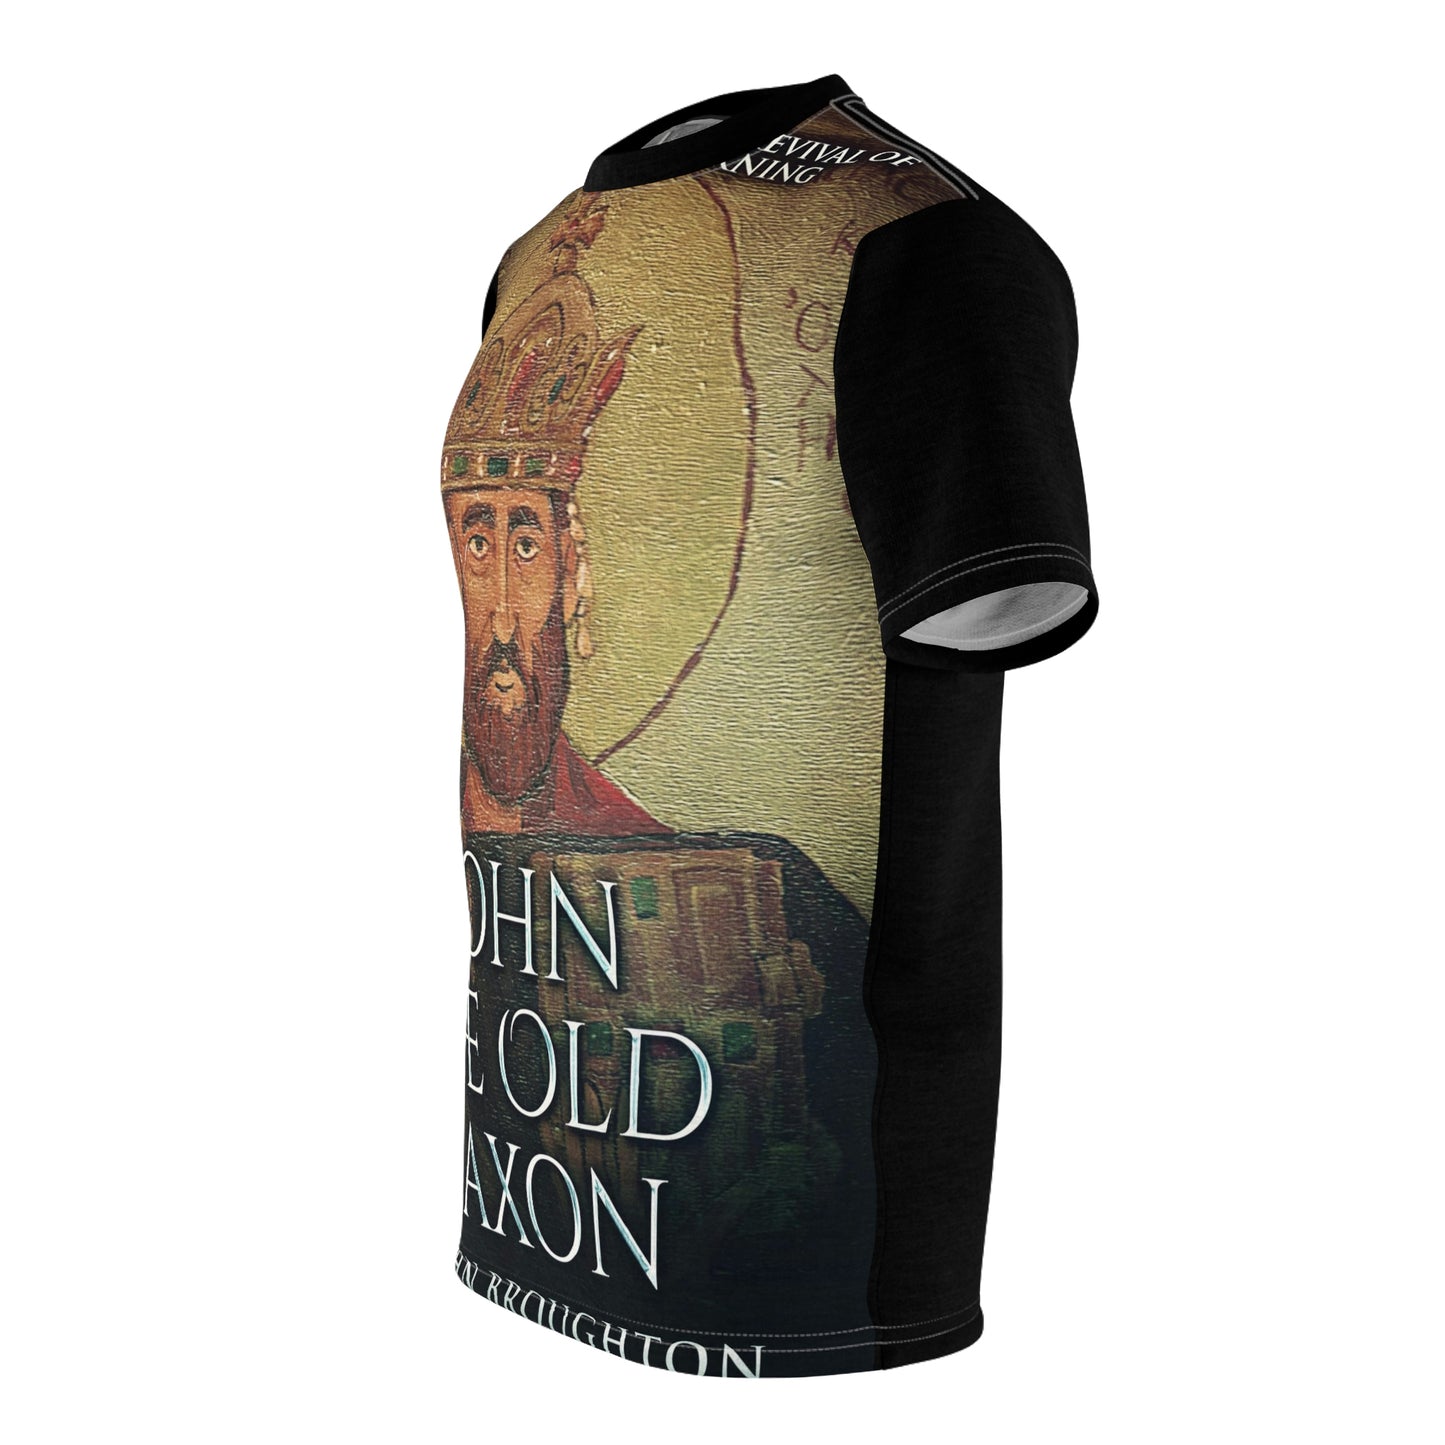 John The Old Saxon - Unisex All-Over Print Cut & Sew T-Shirt